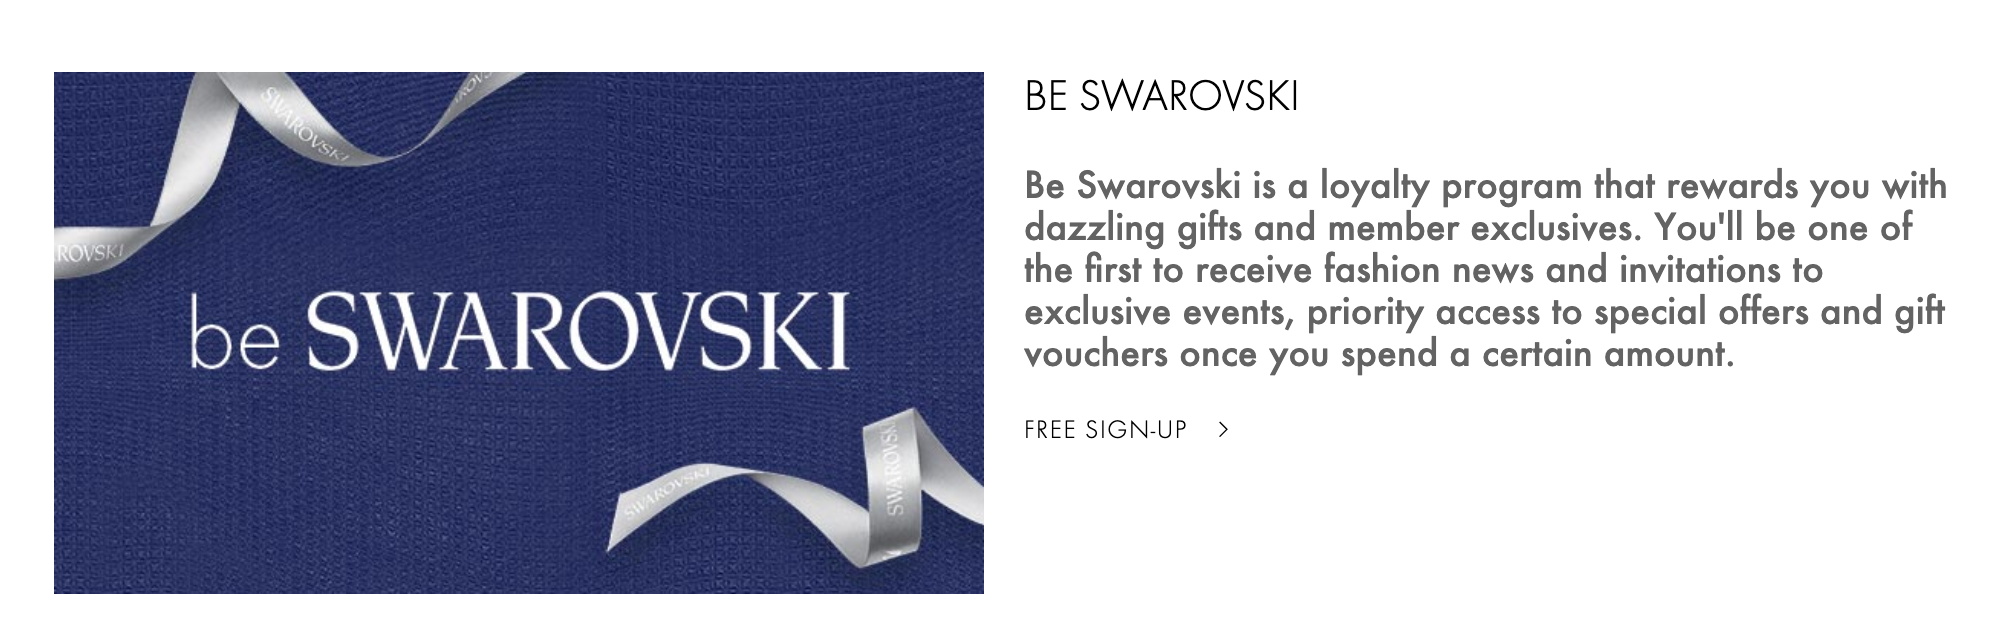 be-swarovski-loyalty-program-example